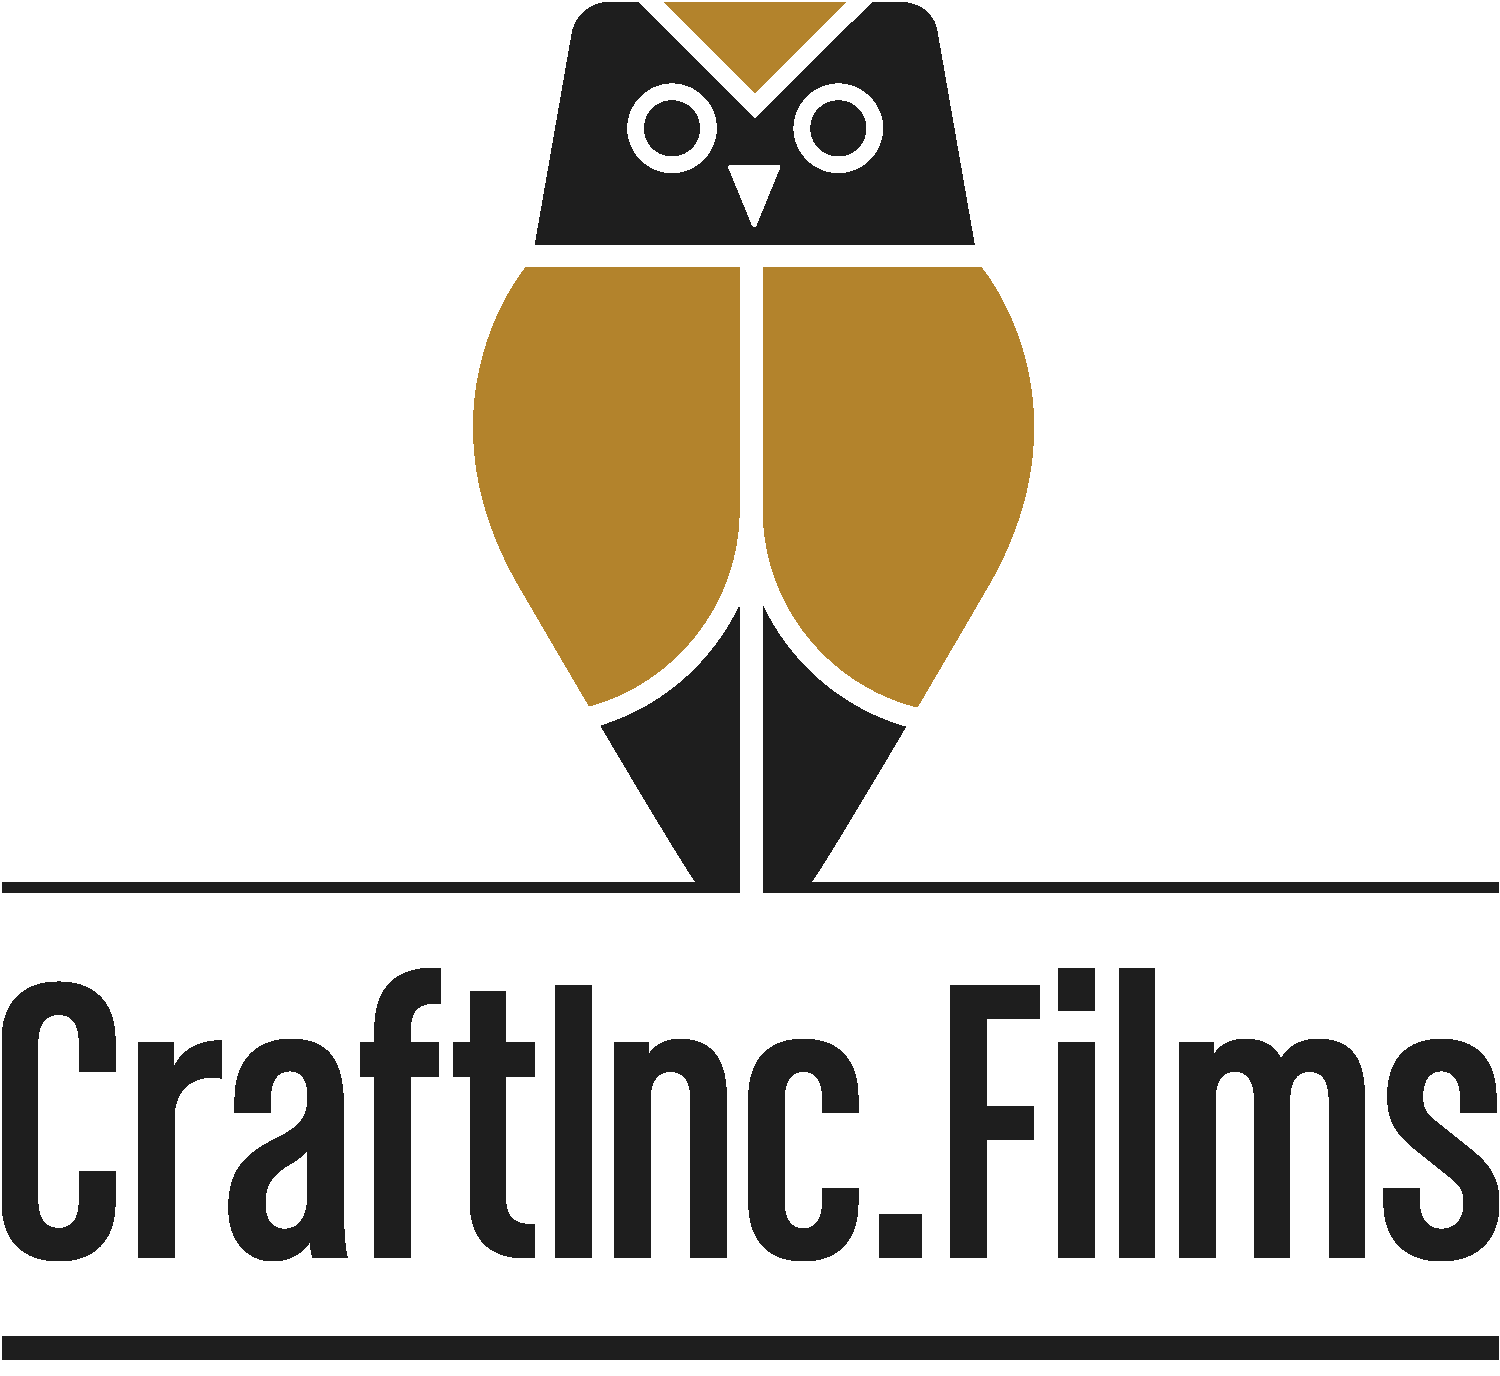 CraftInc. Films